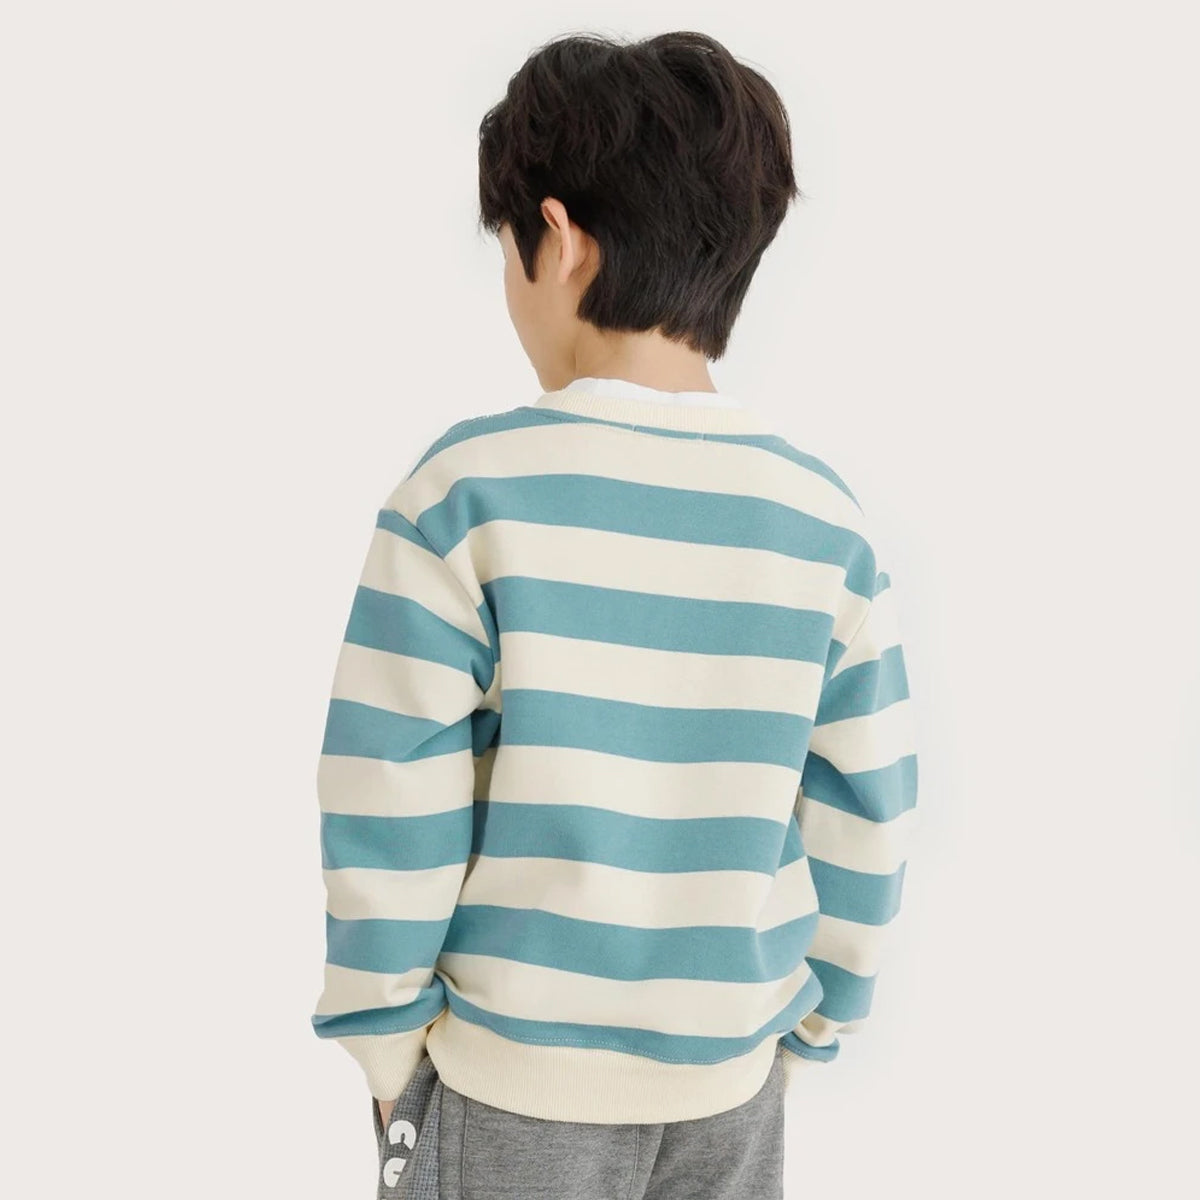 Venutaloza Full Sleeve Round Neck Stripe Tee T-Shirt For Boys.